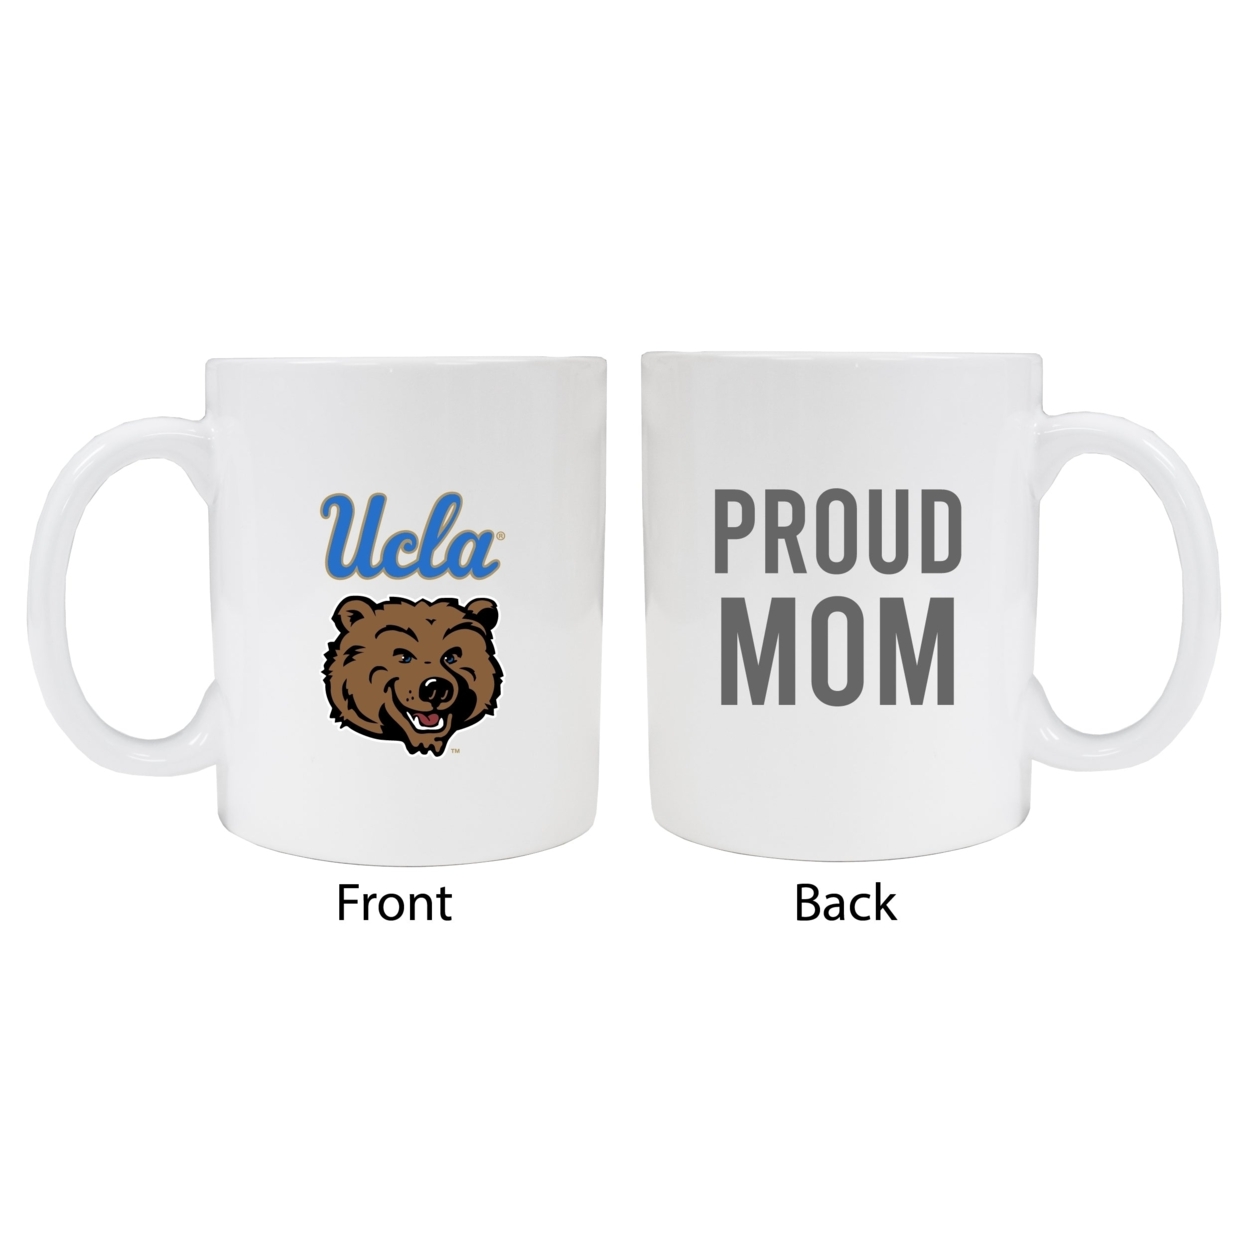 UCLA Bruins Proud Mom Ceramic Coffee Mug - White (2 Pack)